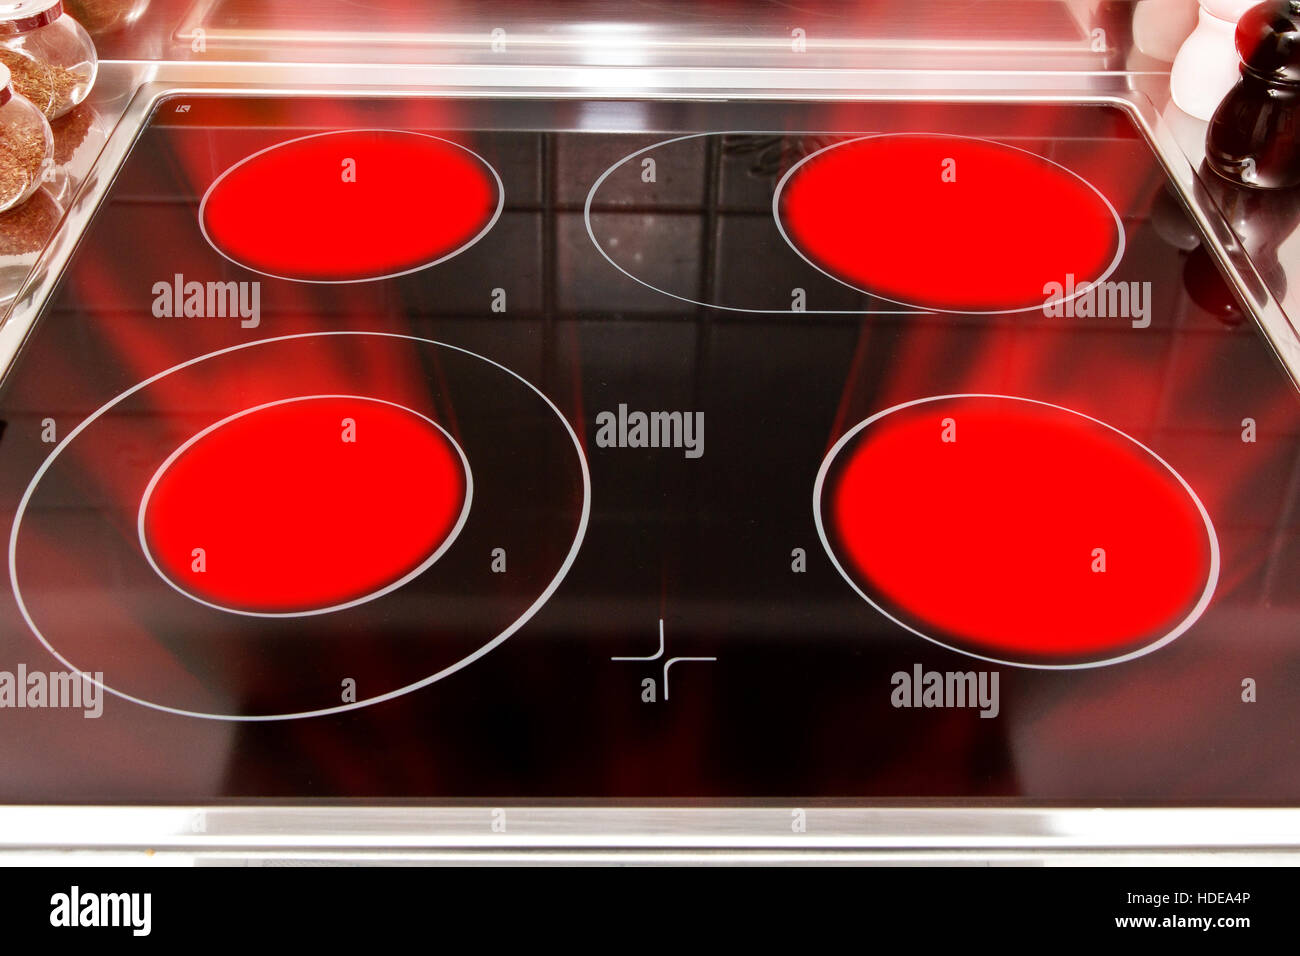 https://c8.alamy.com/comp/HDEA4P/ceramic-stove-top-with-glowing-plates-HDEA4P.jpg